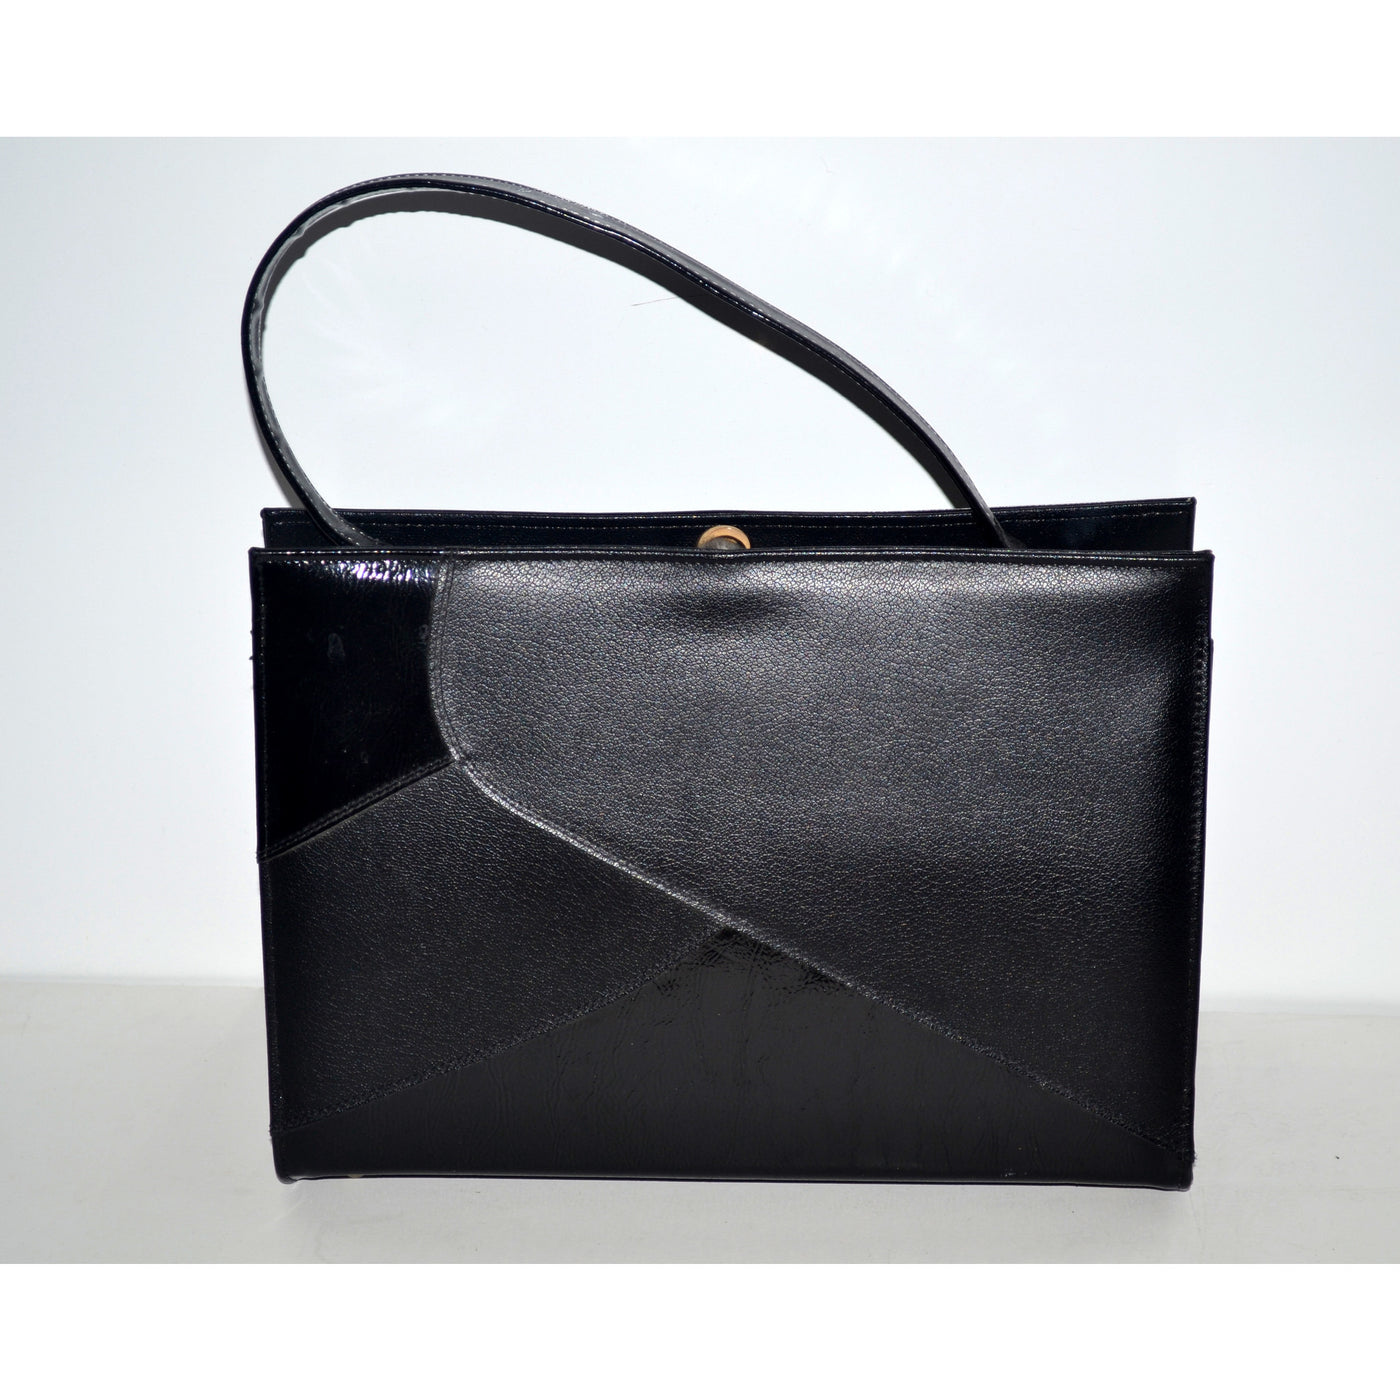  Vintage Black Simulated Leather Handbag By Naturalizer          